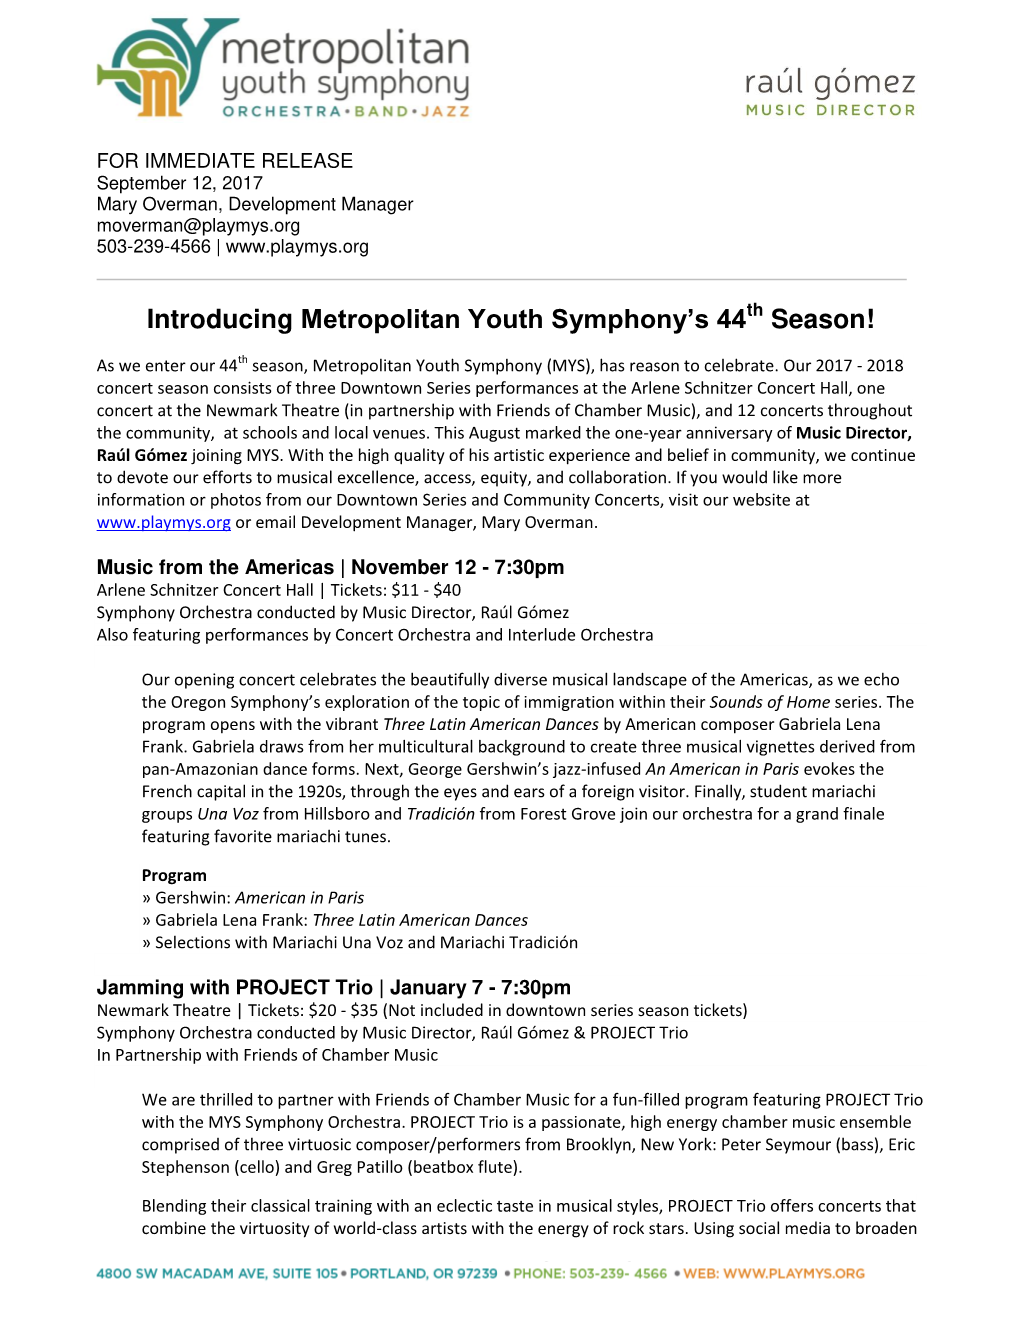 Introducing Metropolitan Youth Symphony's 44 Season!